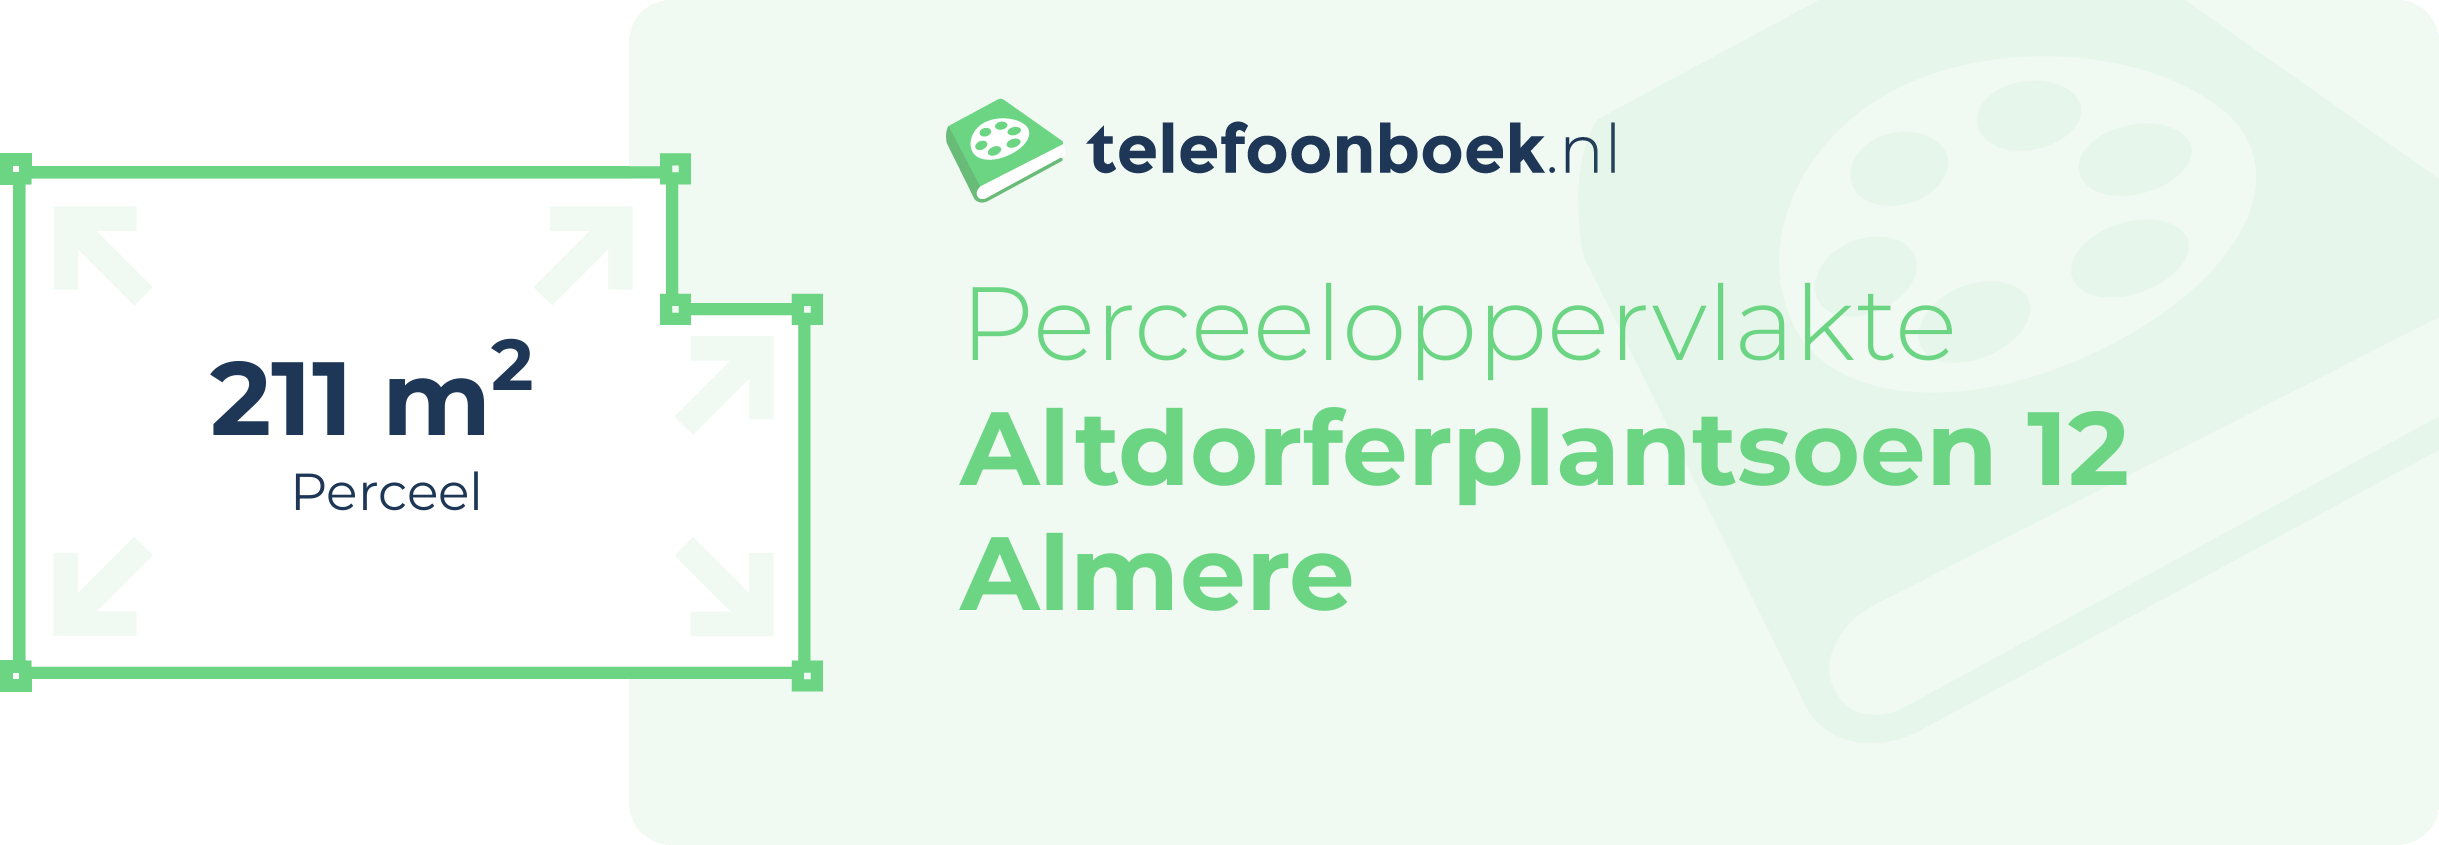 Perceeloppervlakte Altdorferplantsoen 12 Almere